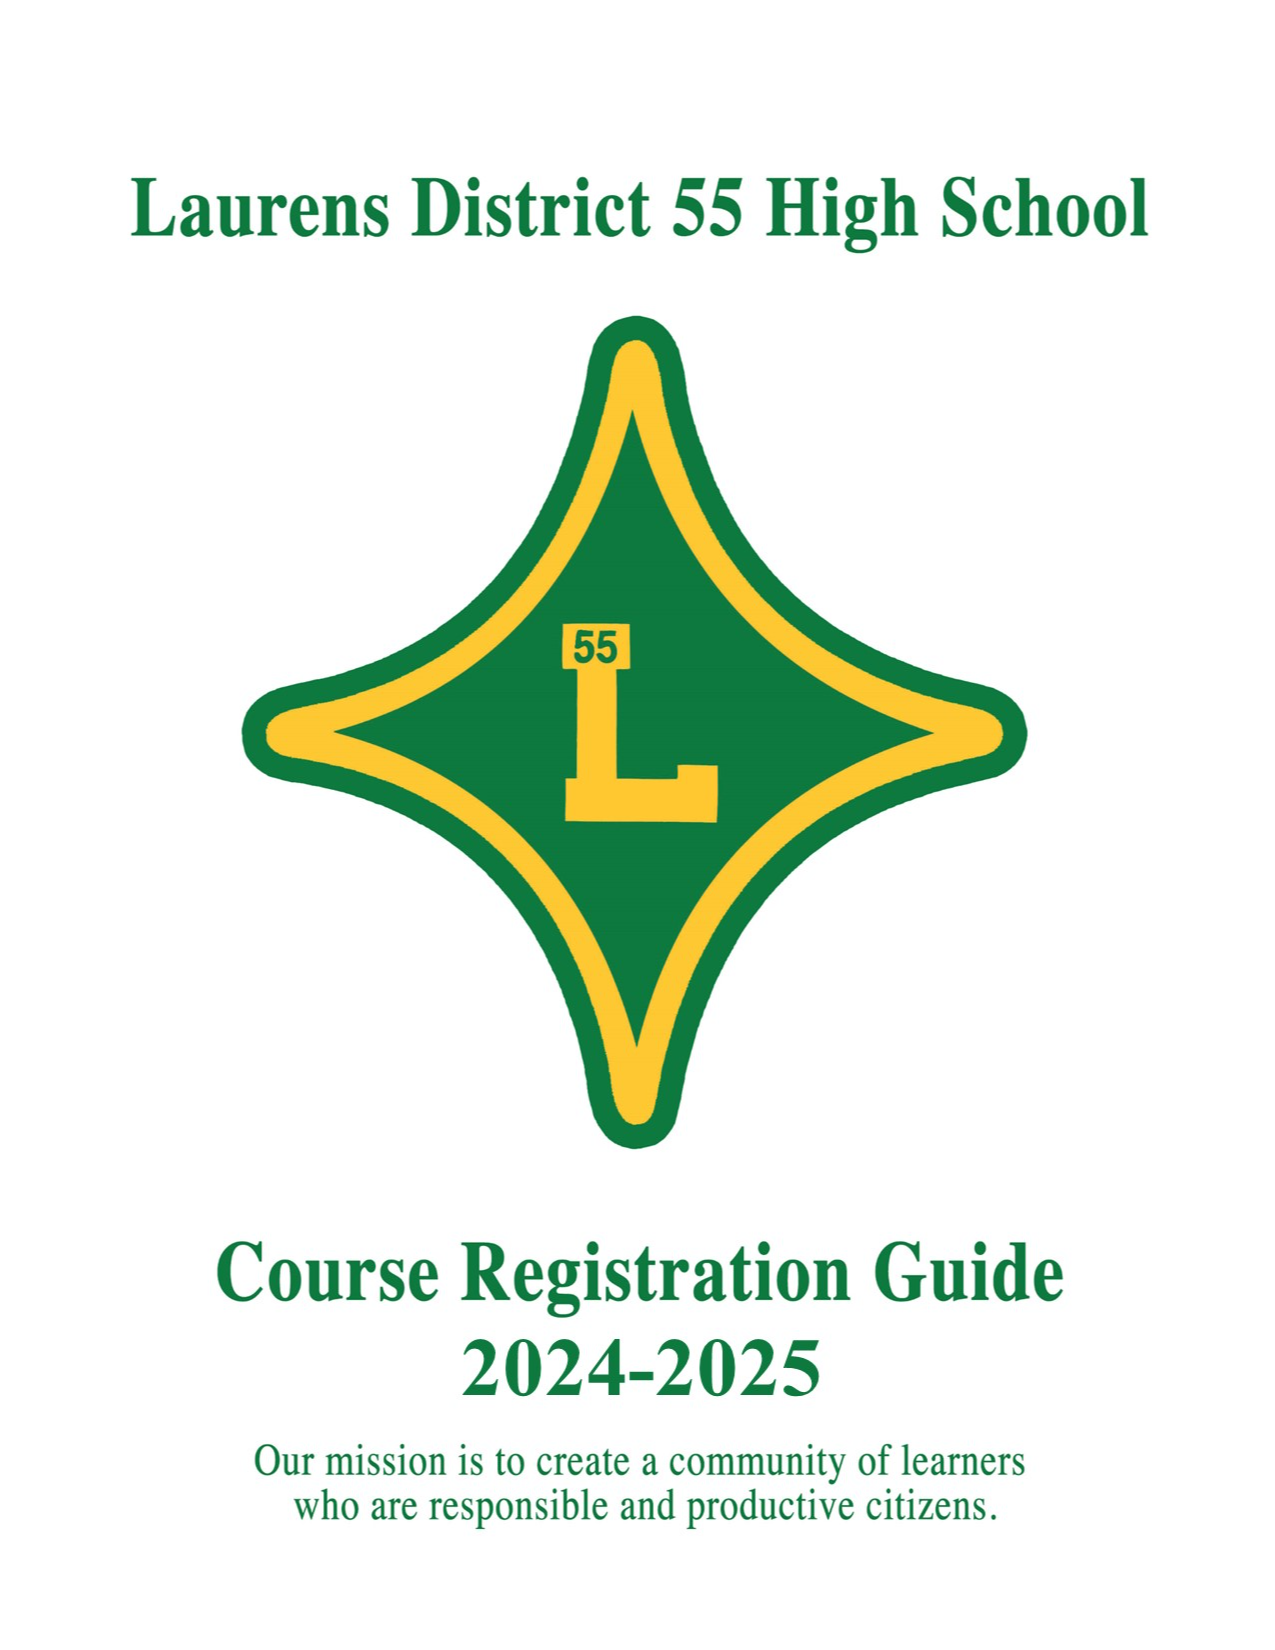 Course Registration Guide 2023-2024